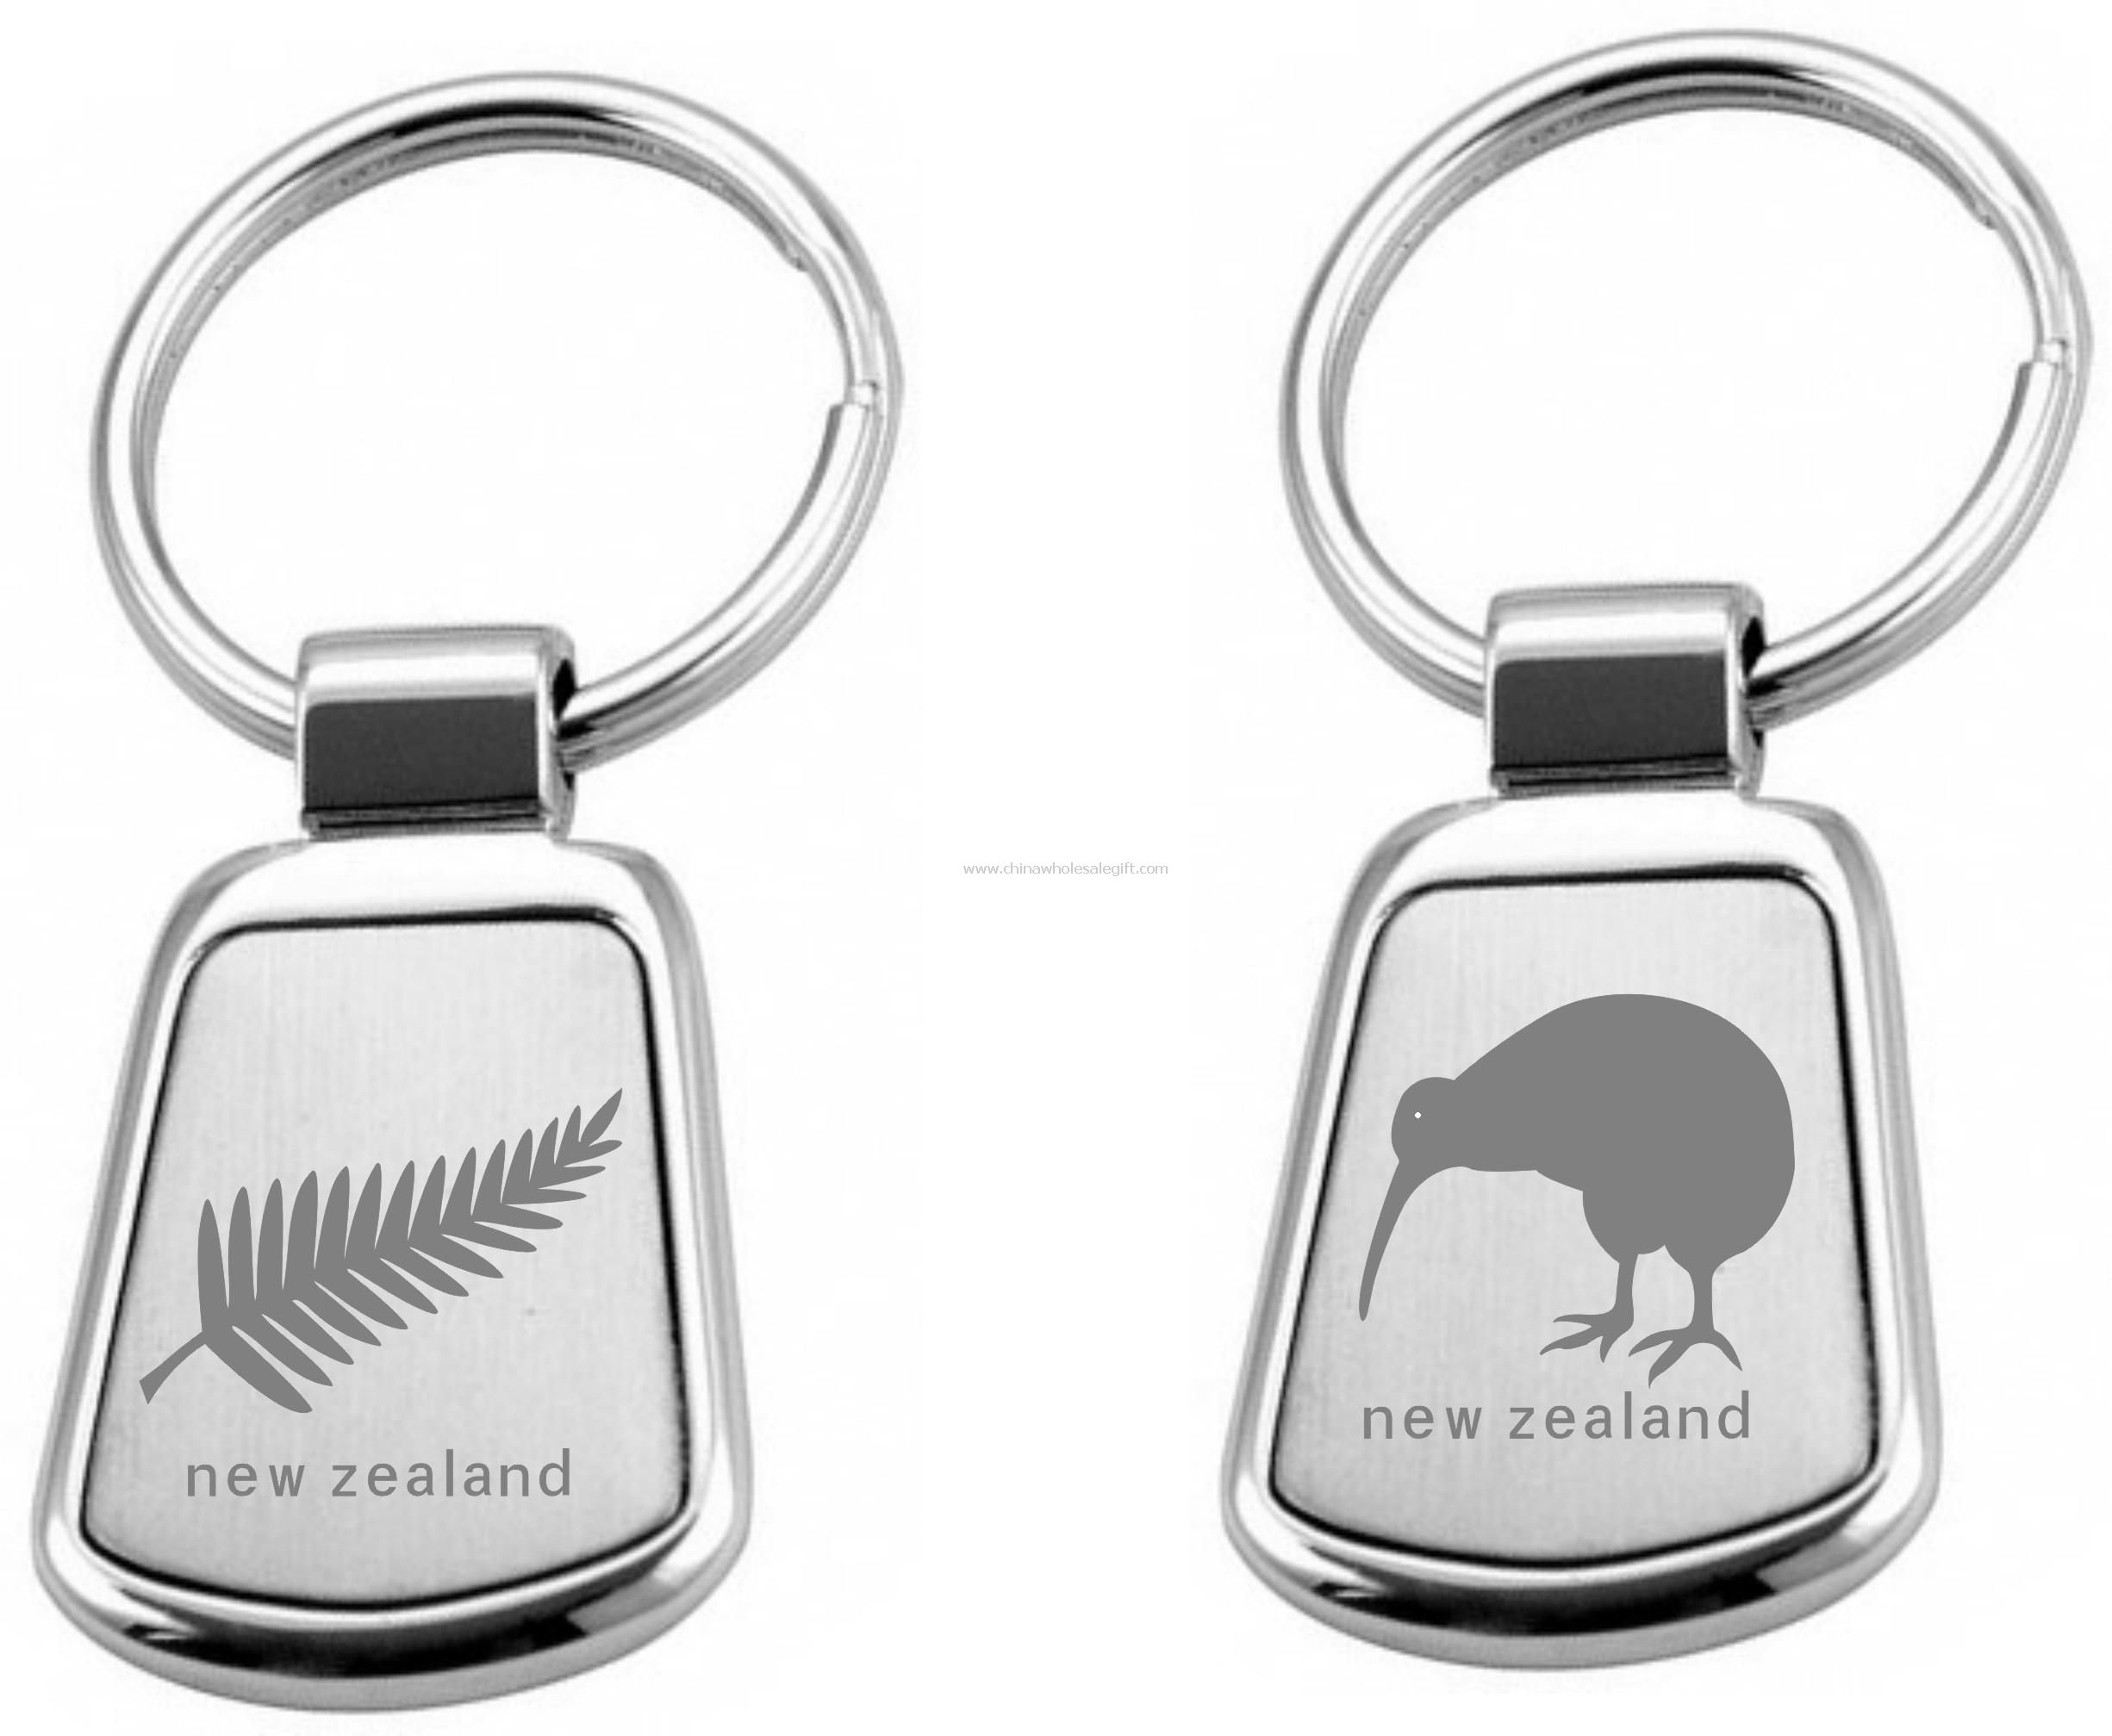 Zinc alloy keychains with logo